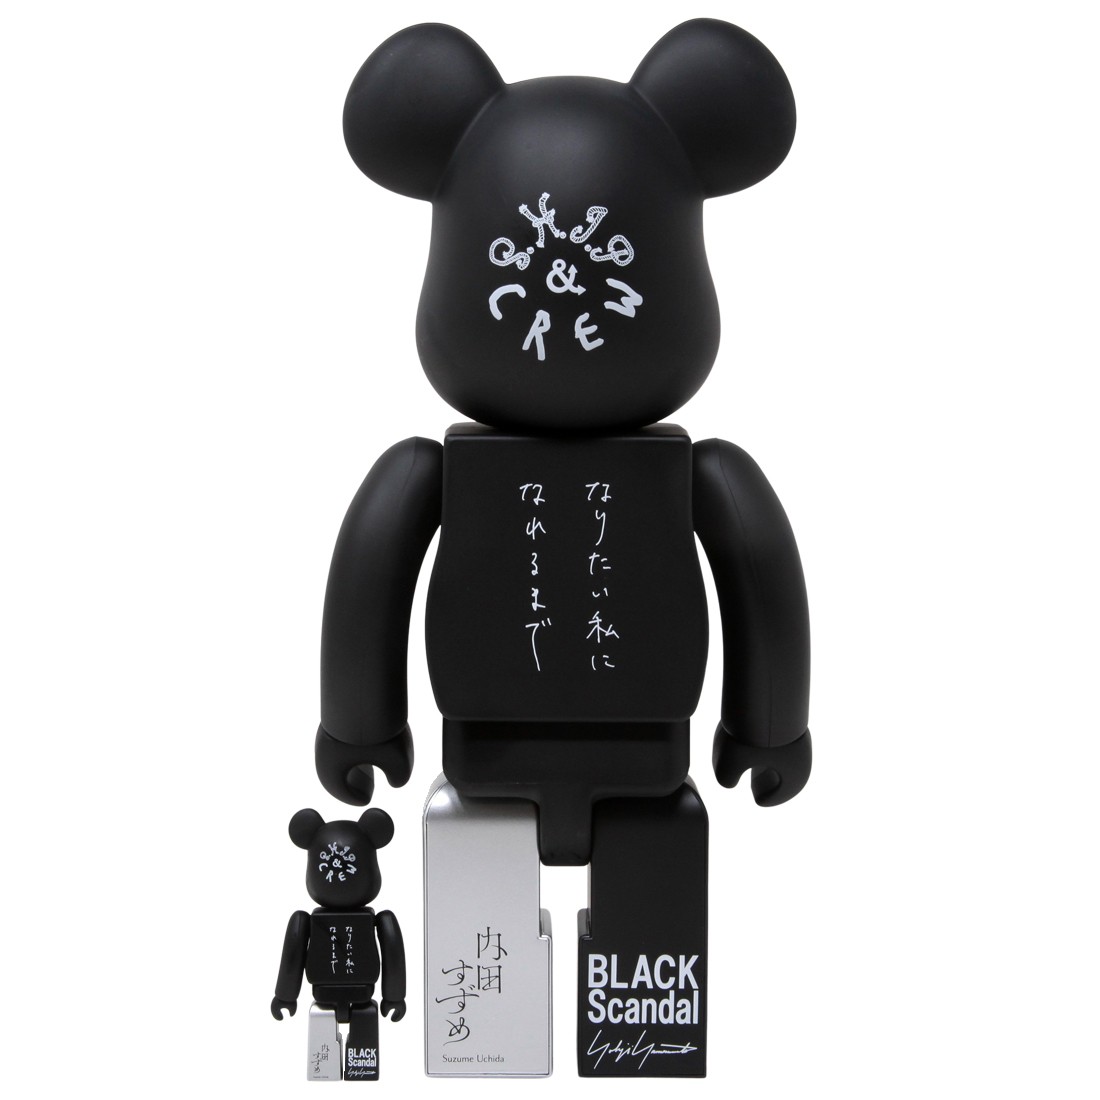 Medicom x BLACK Scandal Yohji Yamamoto x Suzume Uchida x S.H.I.P And Crew  Ideal Self 100% 400% Bearbrick Figure Set (black)